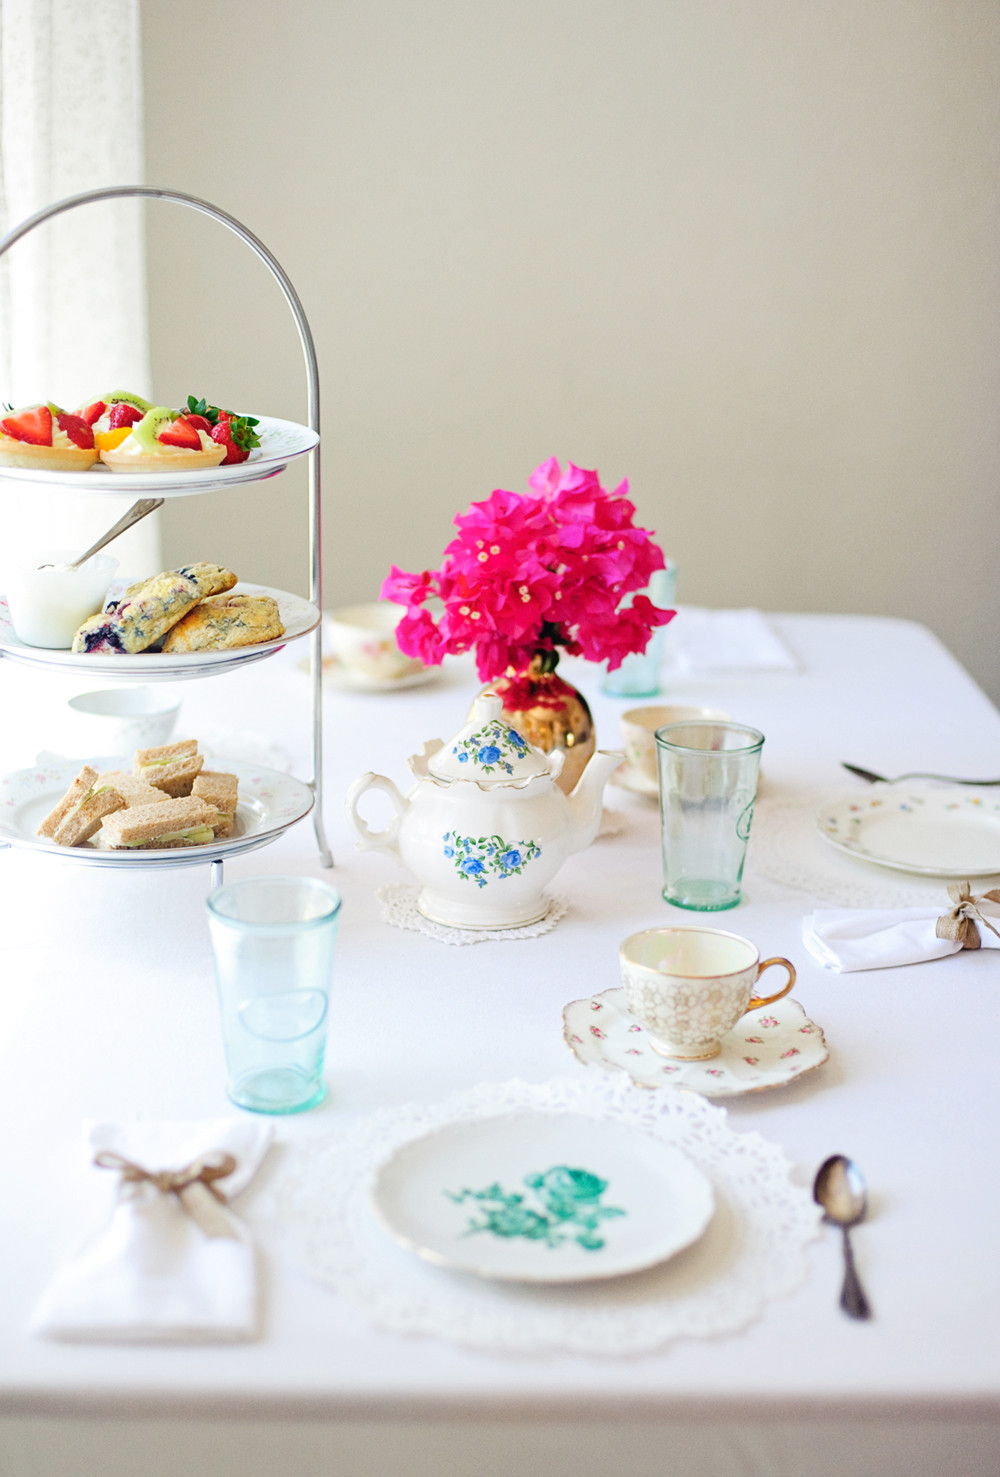 Pinterest Tea Party Ideas
 Tea Party Ideas & Recipes How to Host an Easy & Elegant